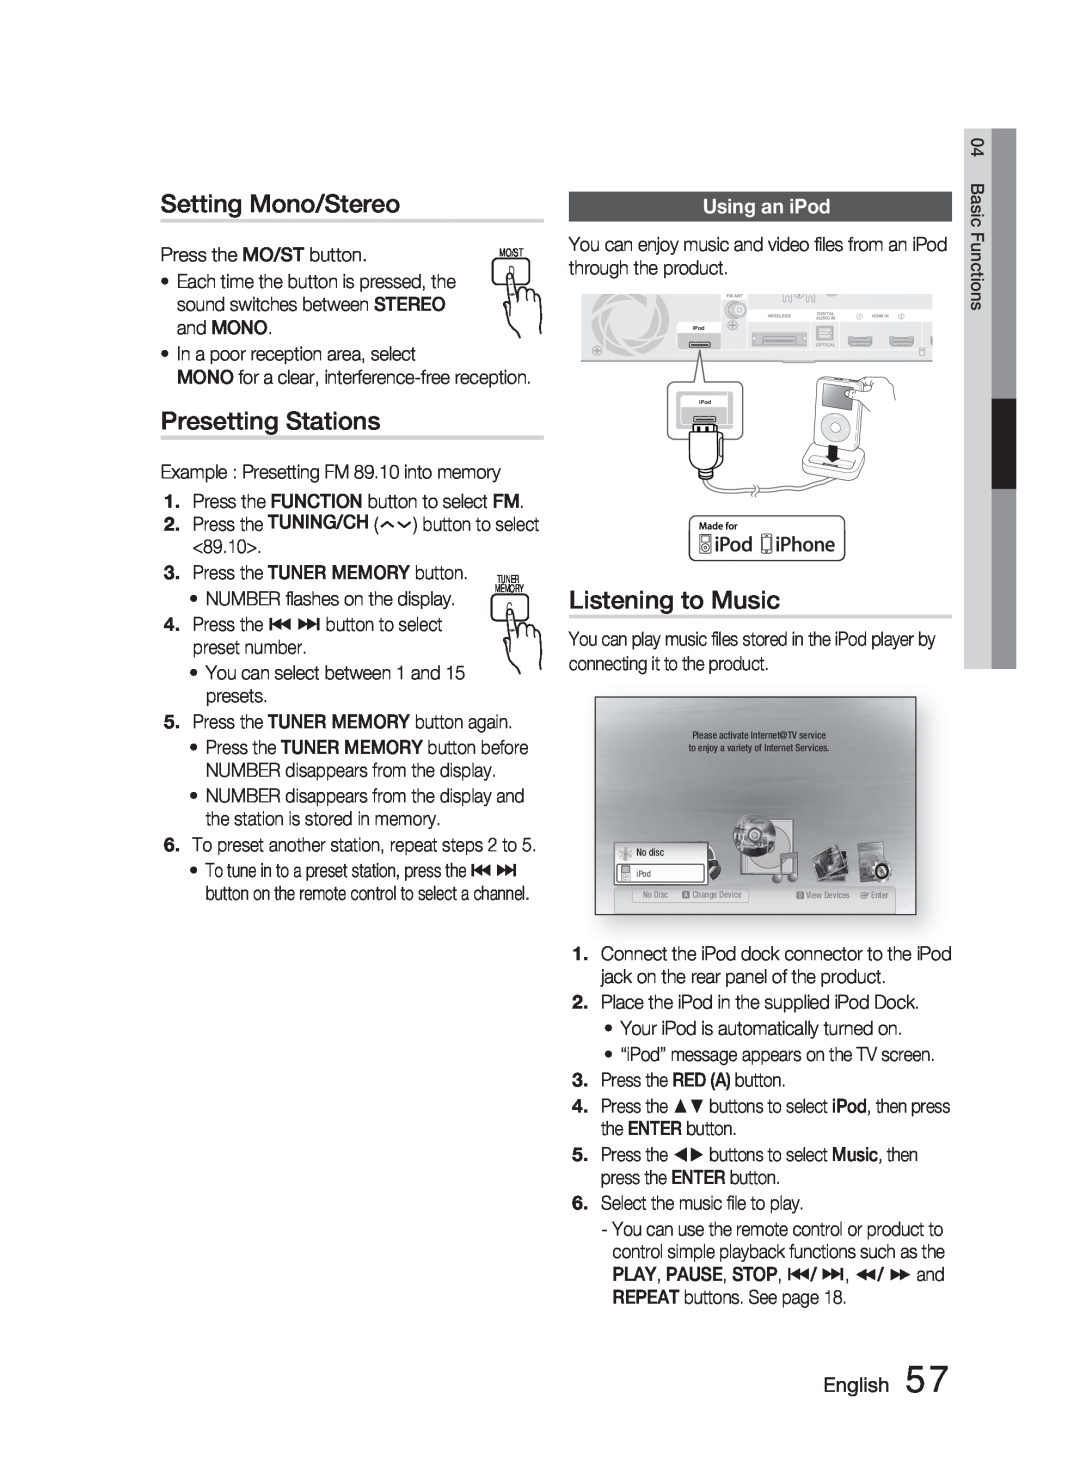 Samsung AH68-02279R user manual Setting Mono/Stereo, Presetting Stations, Listening to Music, Using an iPod, English 